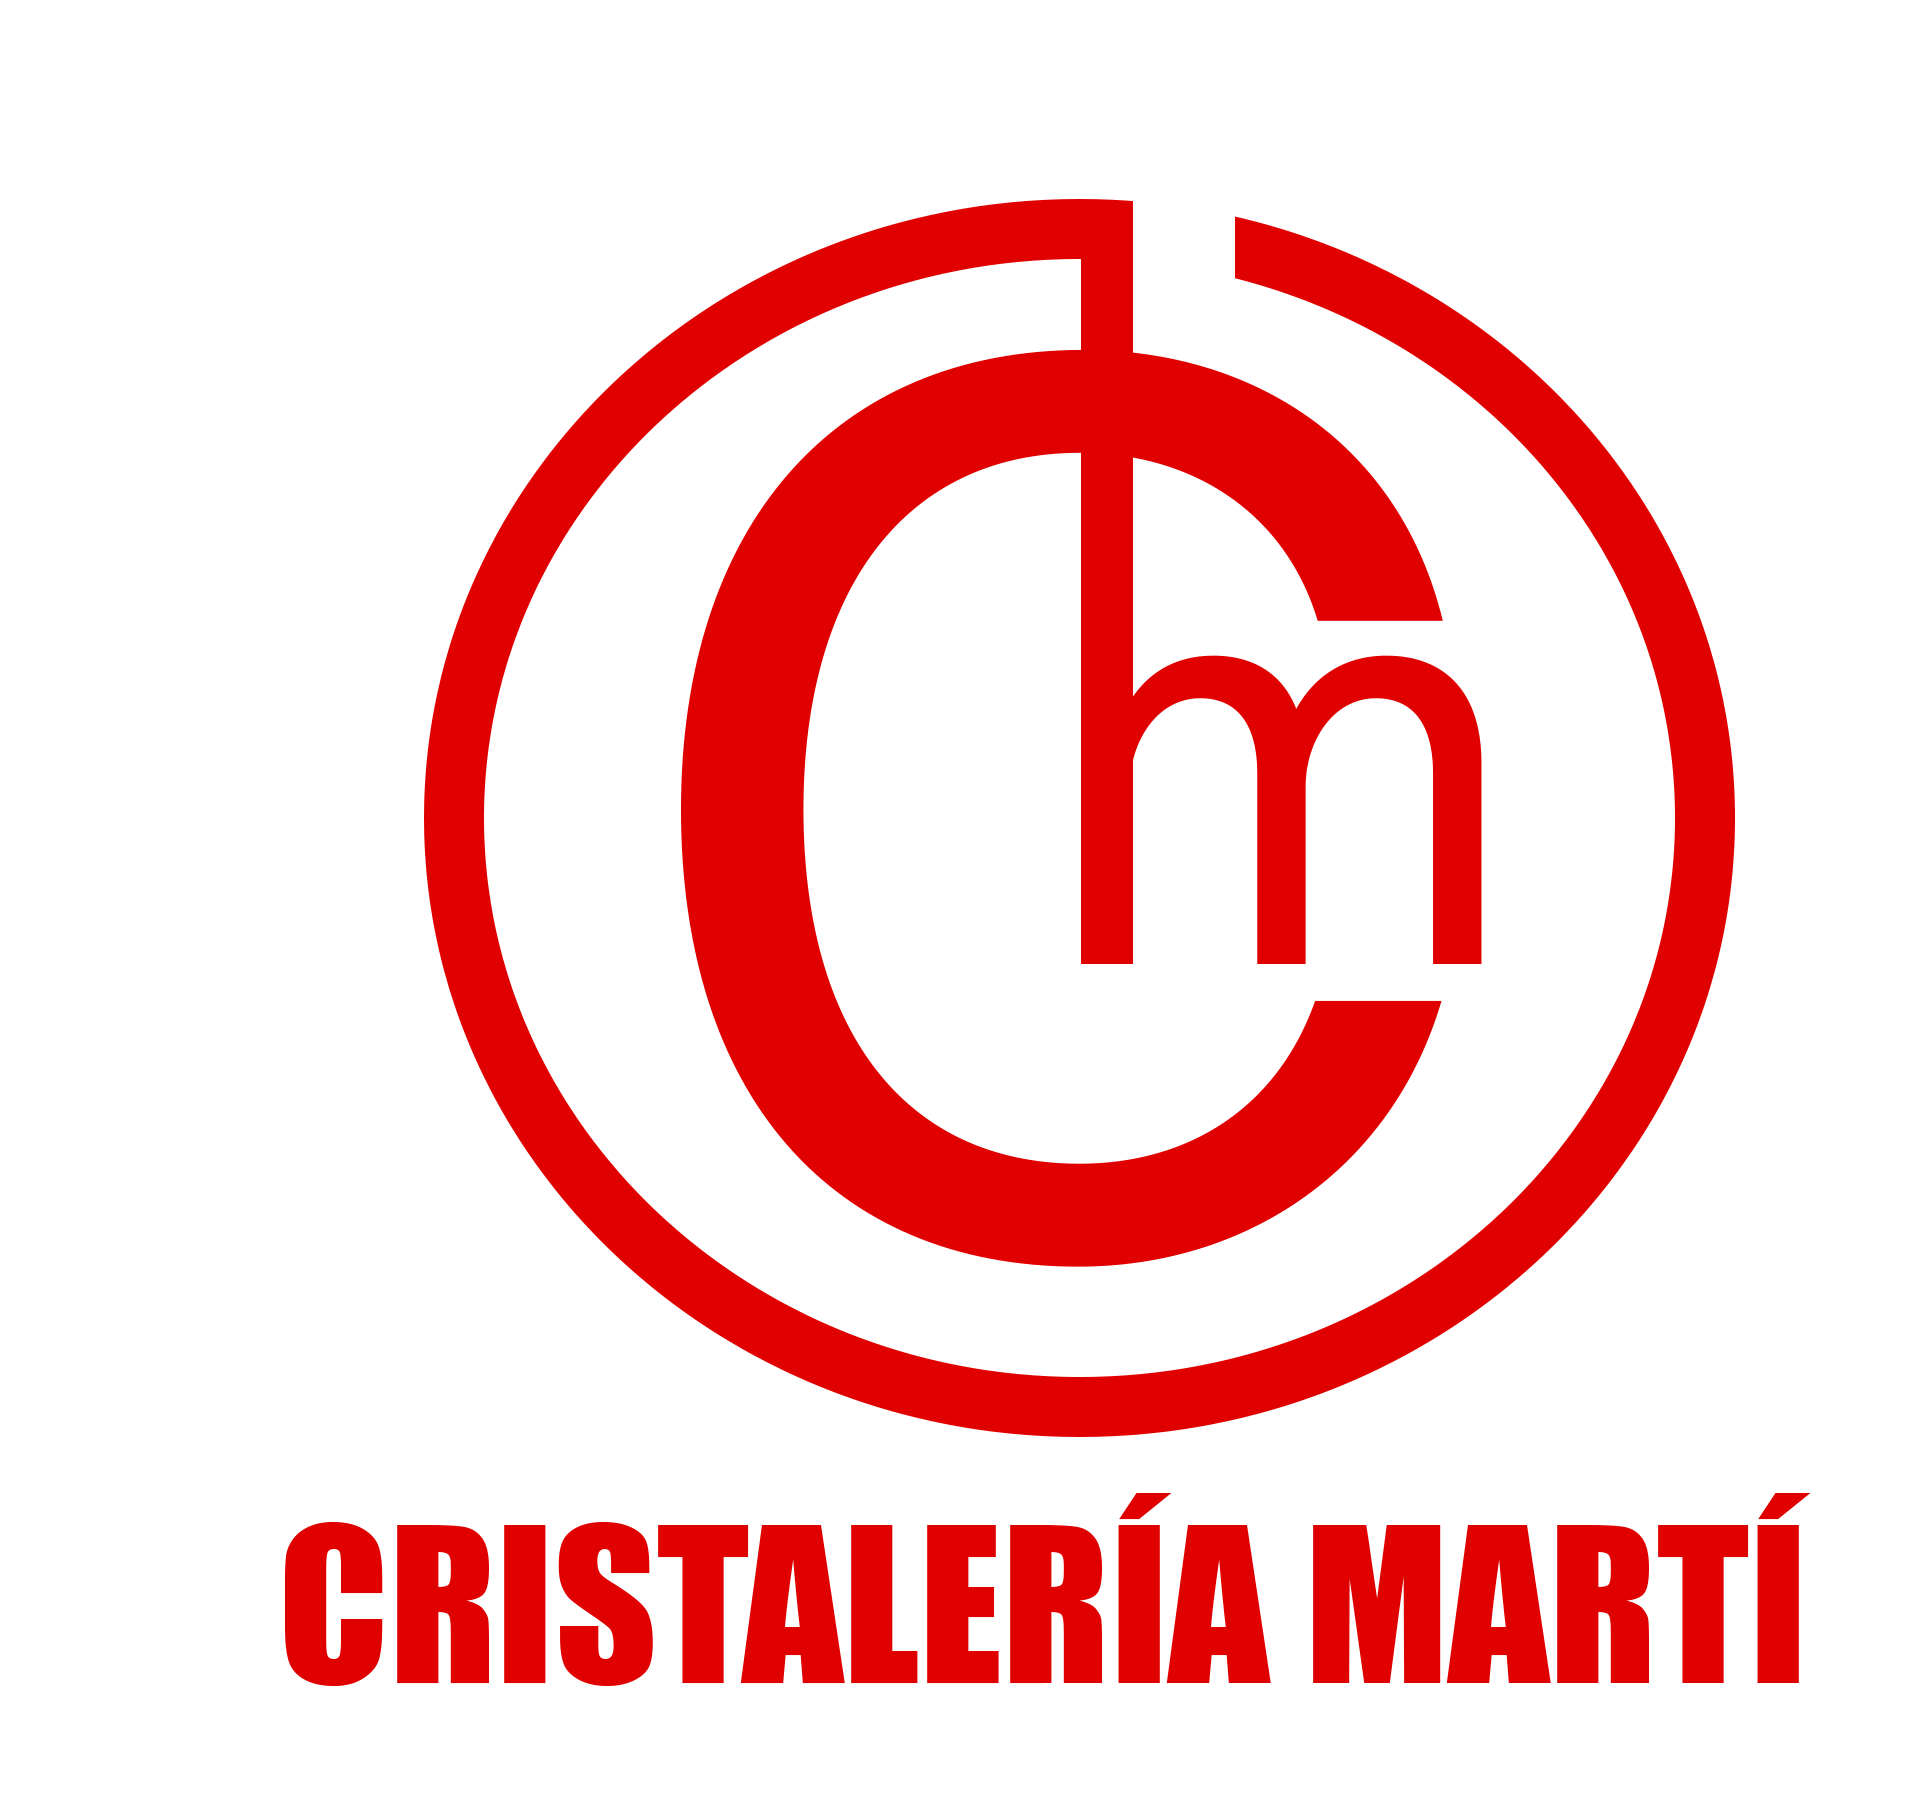 CRISTALERIA MARTI OBRERA F.V.